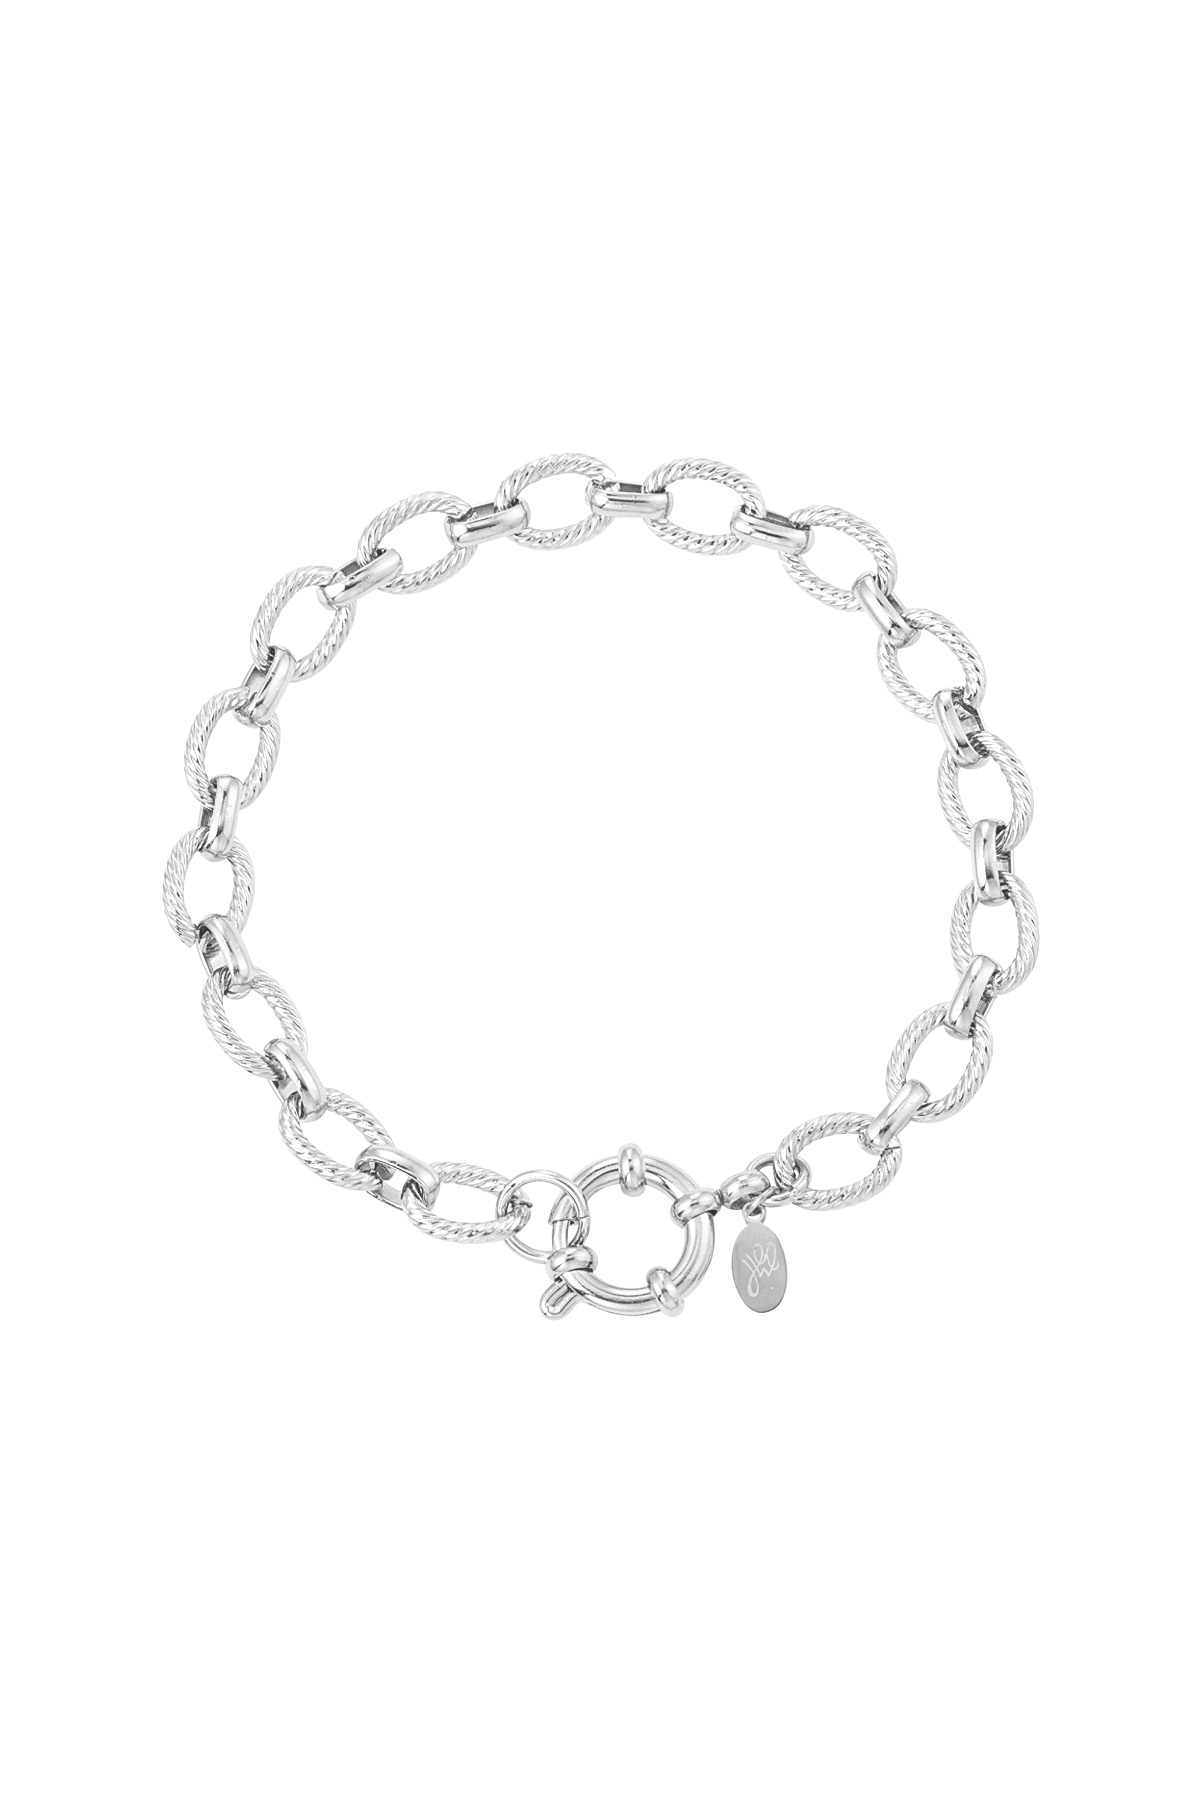 Bracelet round links - silver h5 